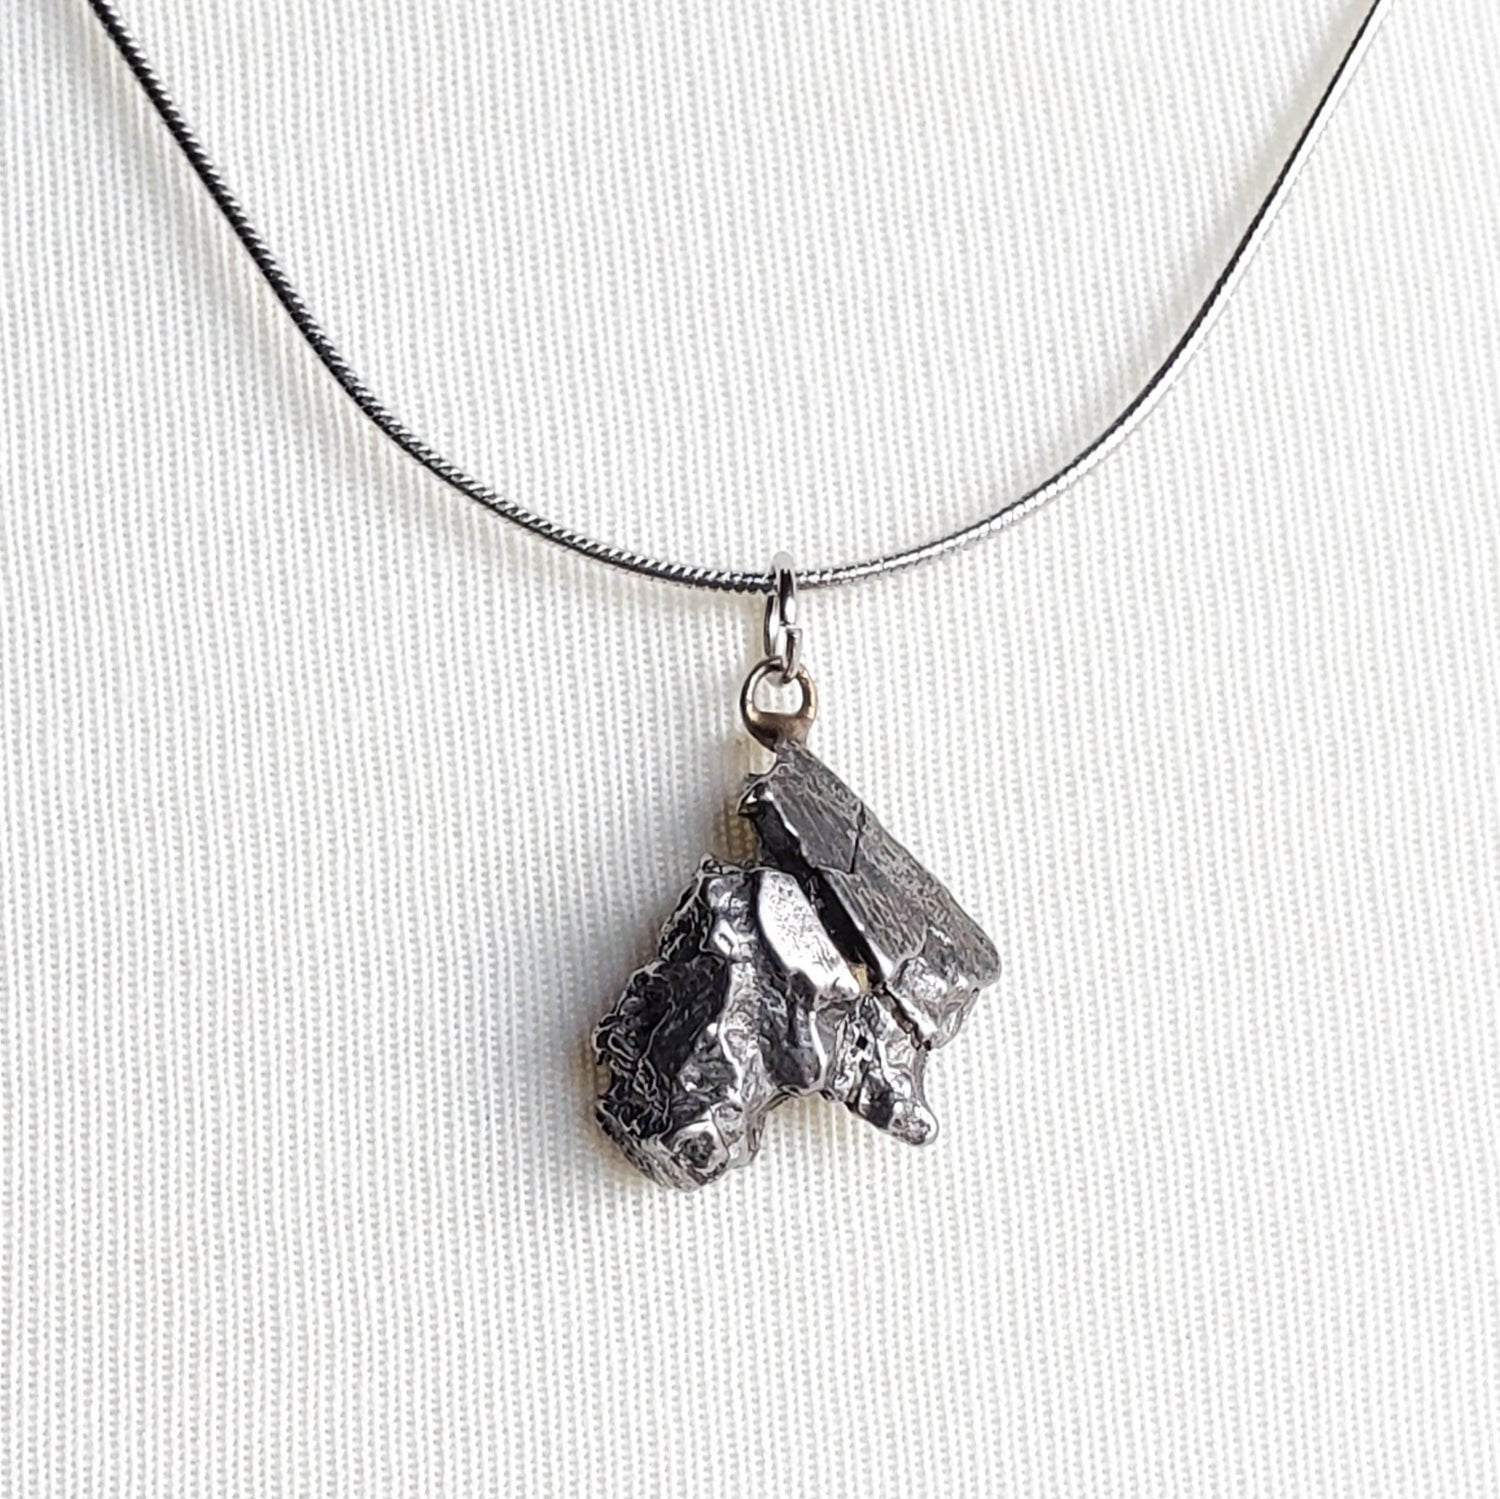 Meteorite Jewelry